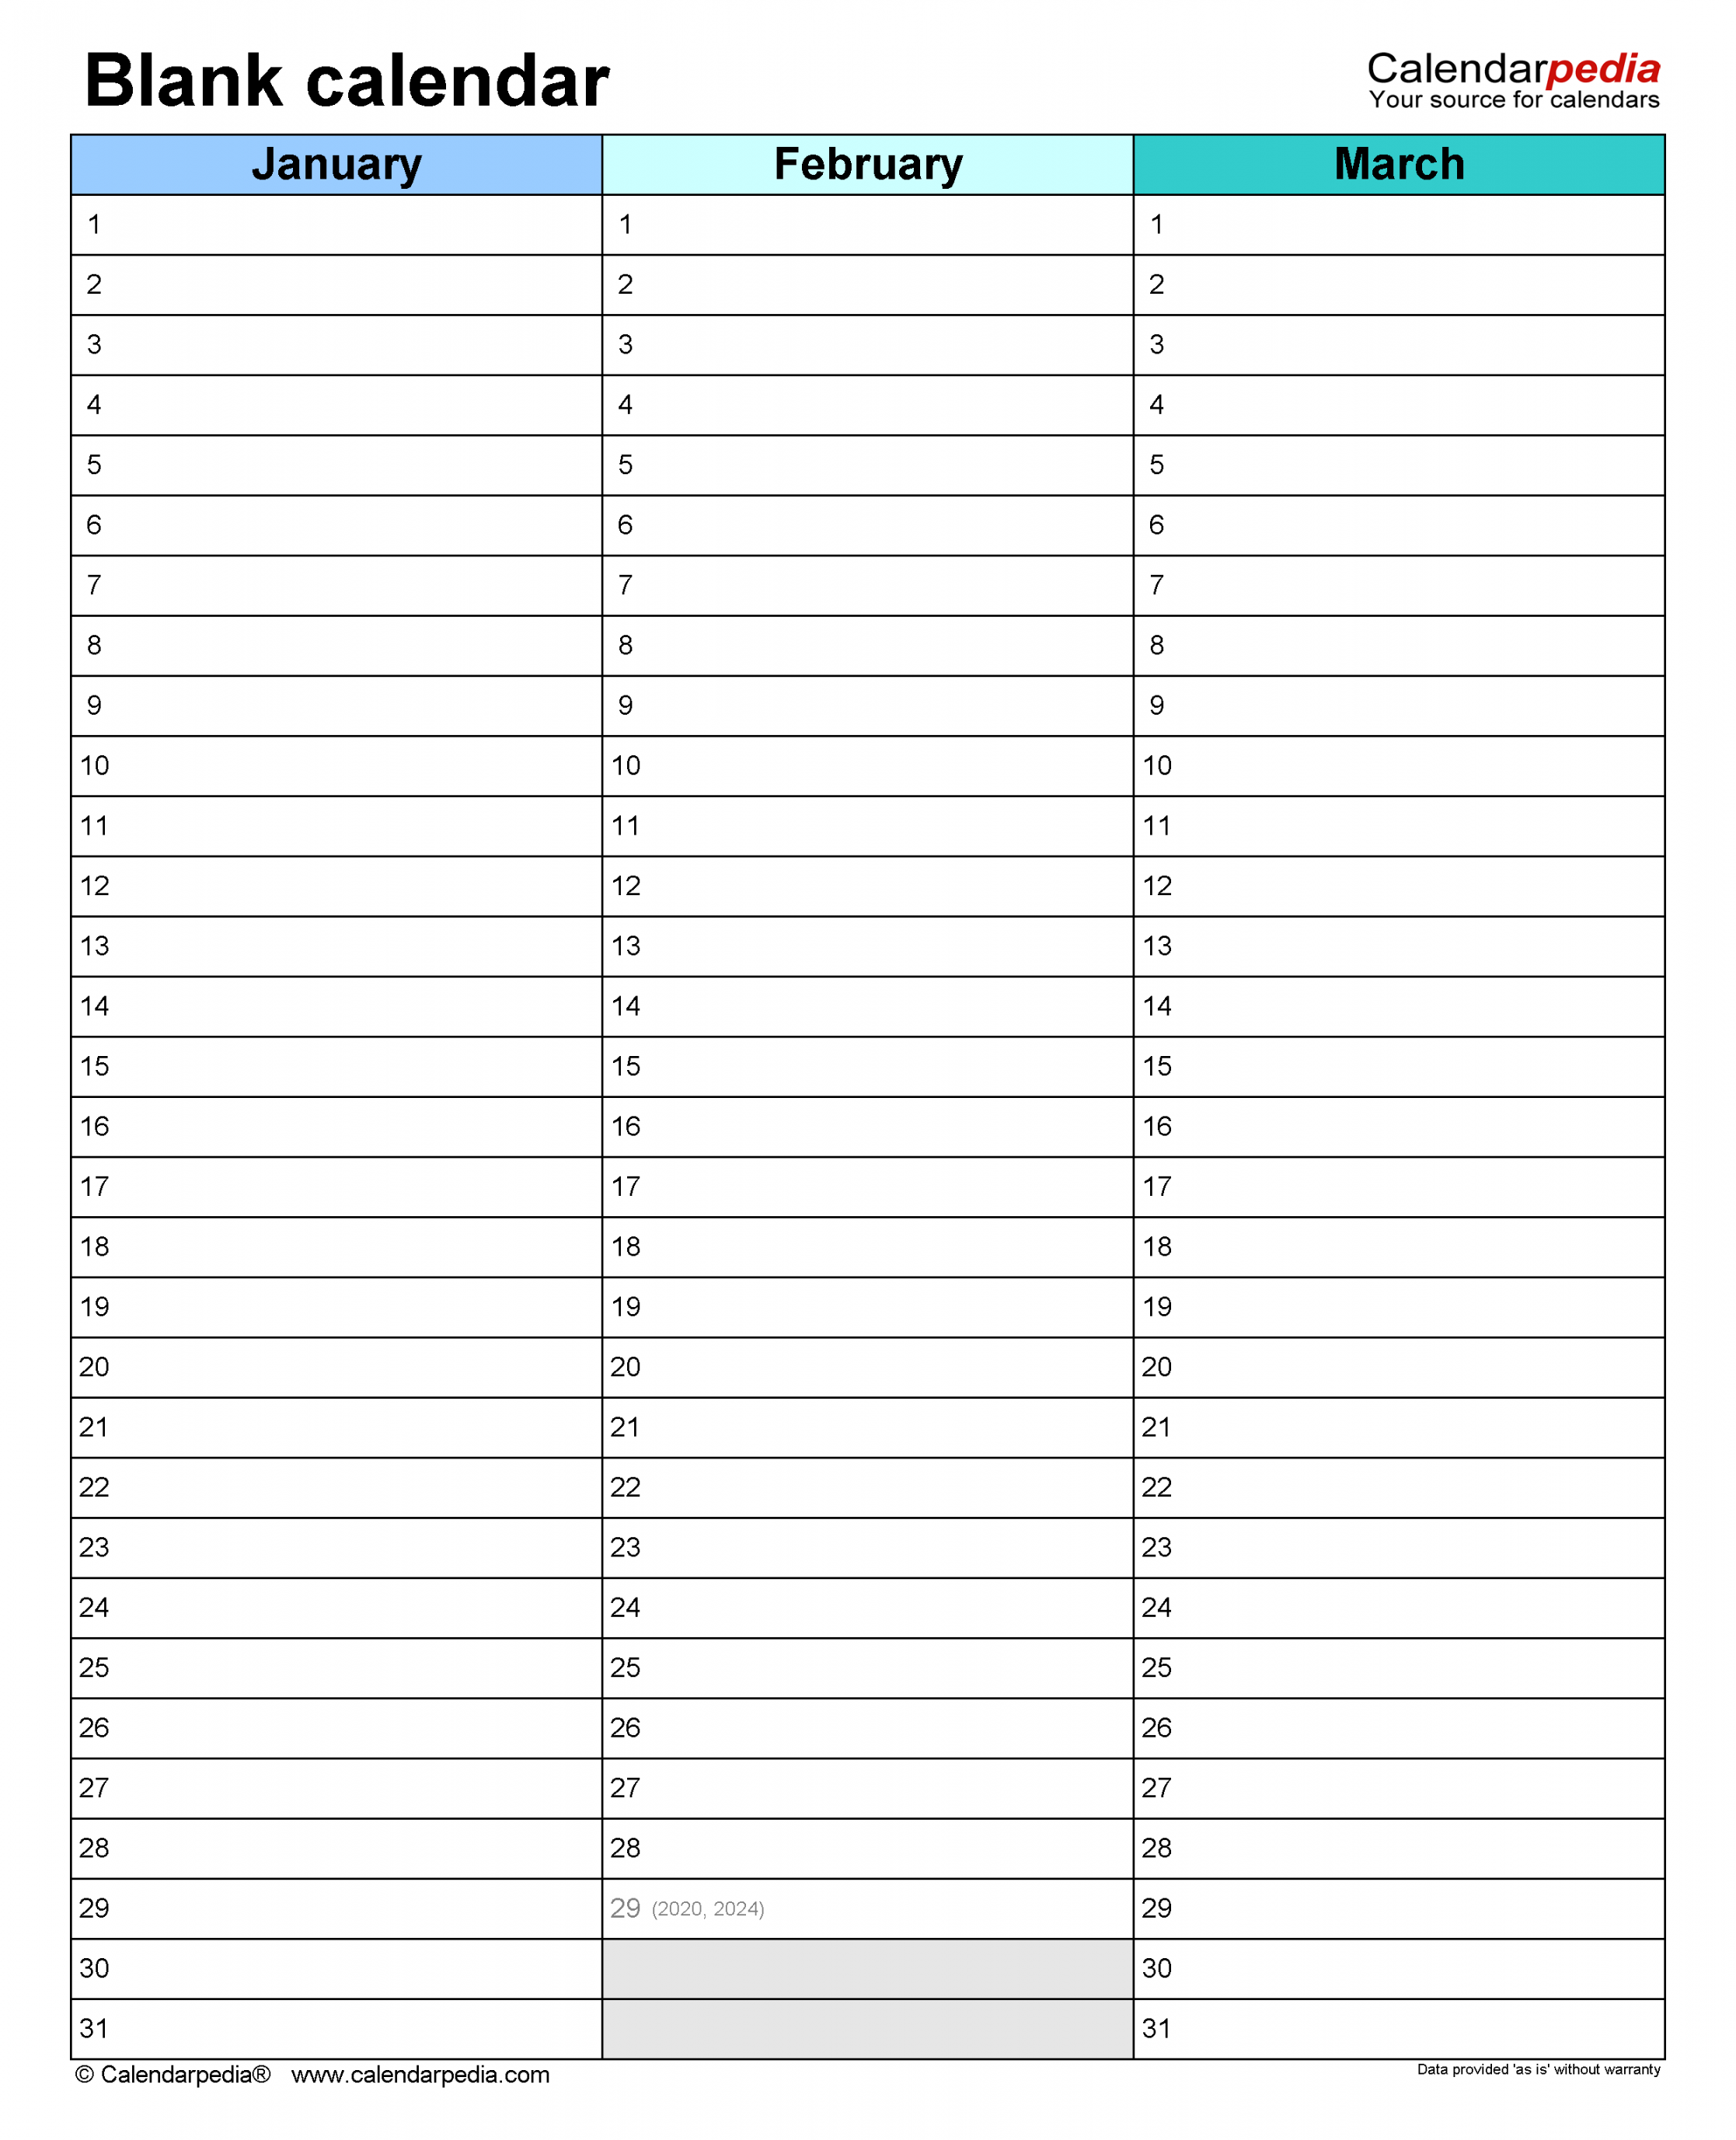 Blank Calendars - Free Printable Microsoft Excel templates